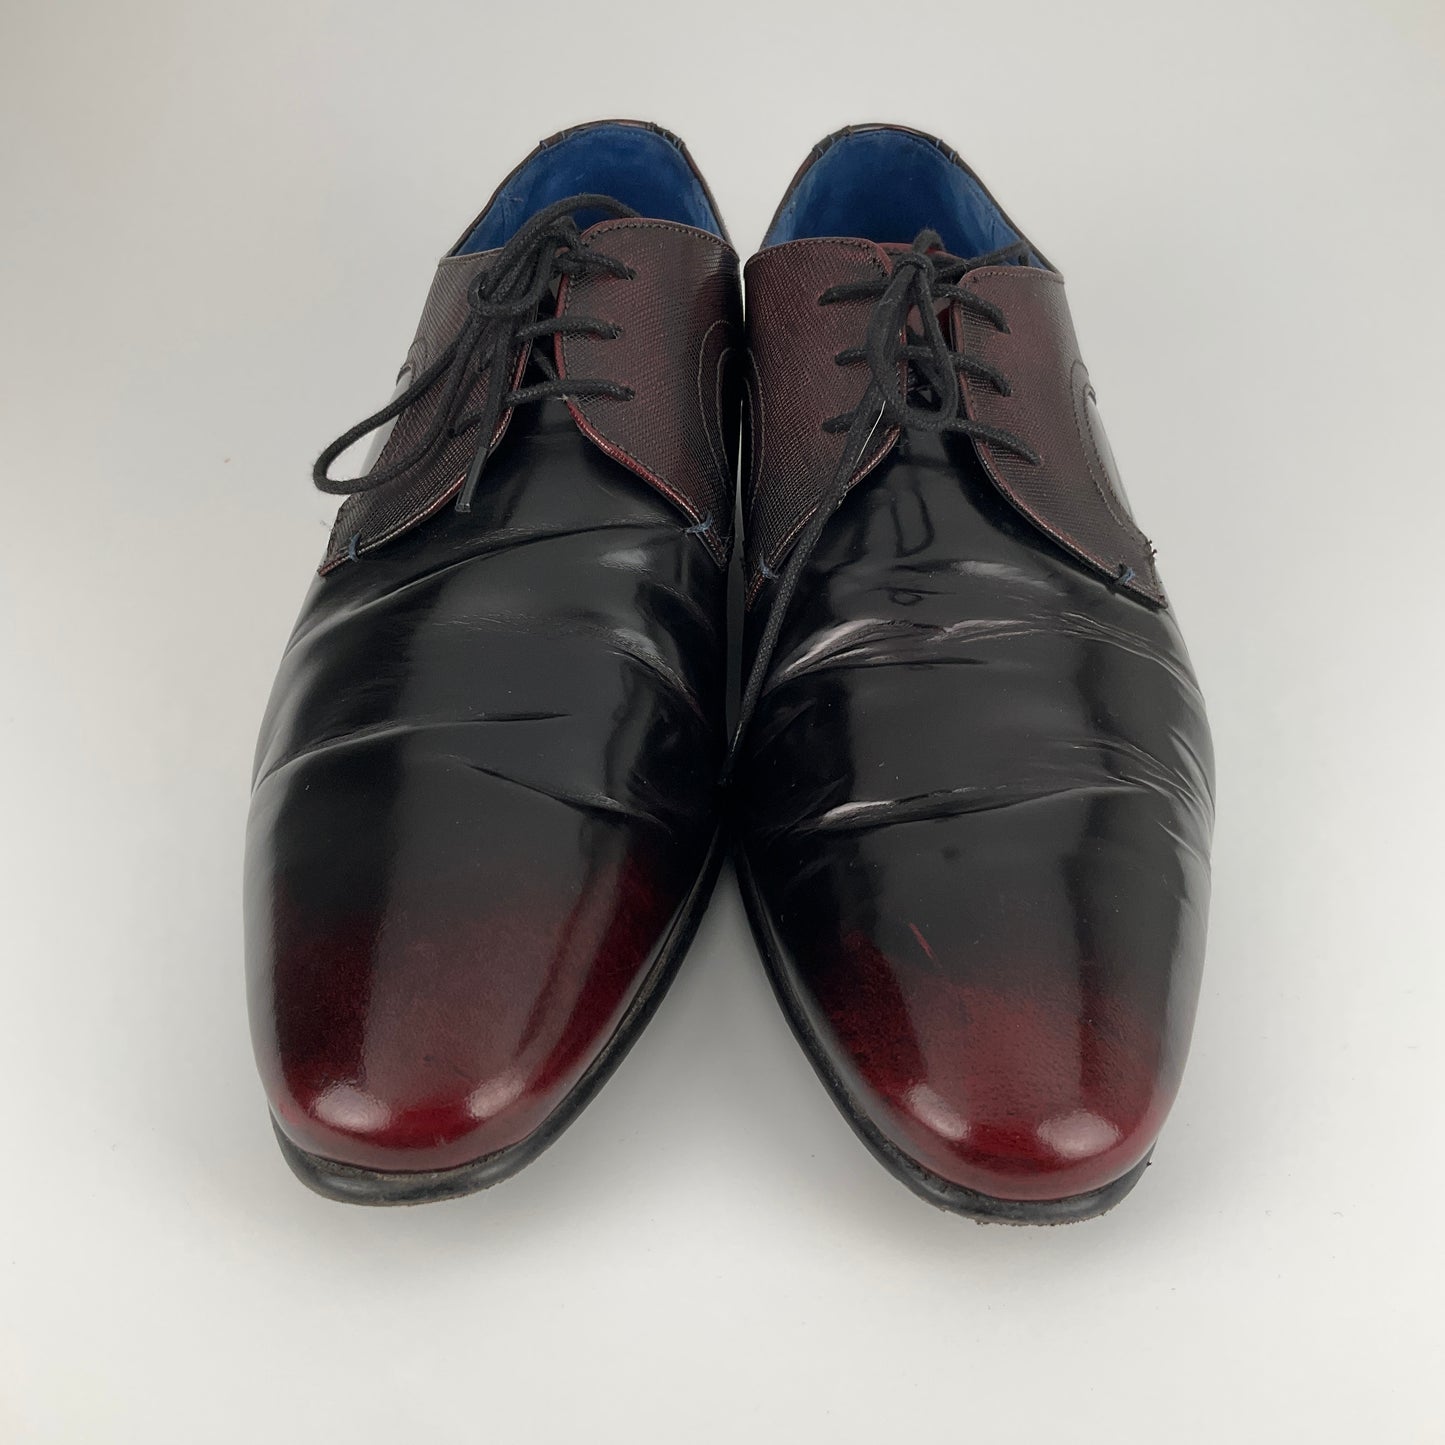 Ted Baker - Pelton Derby shoes - Size UK10